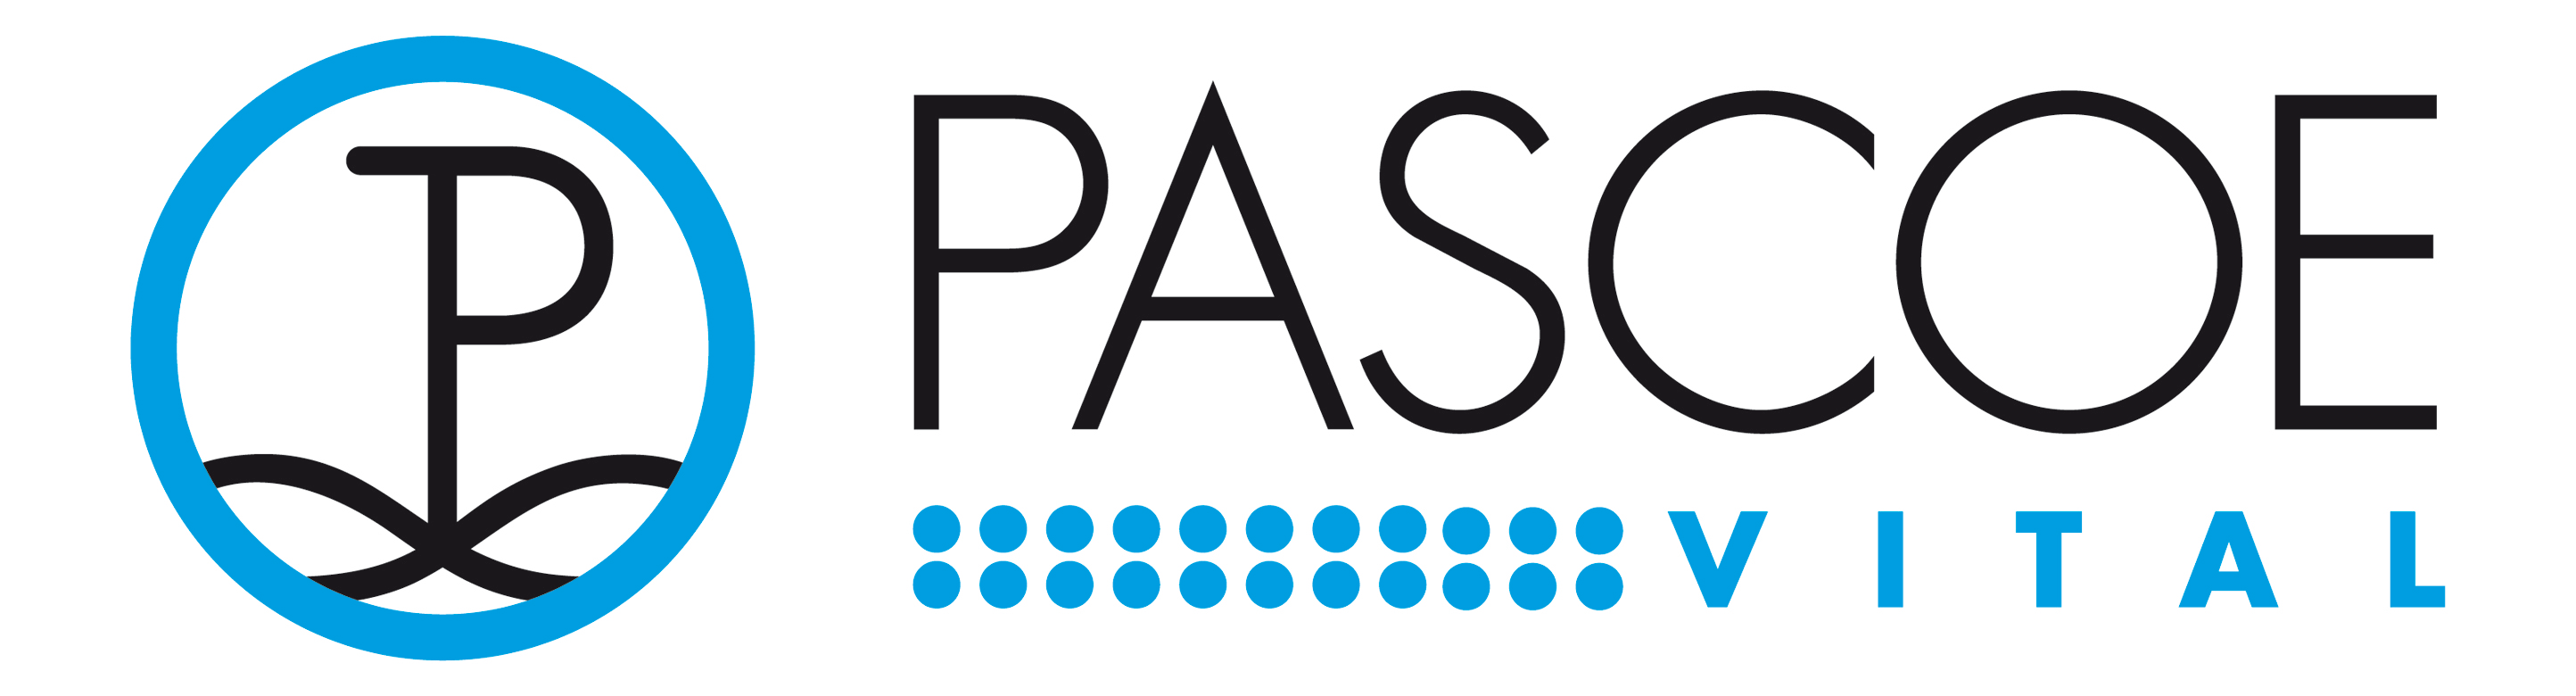 PASCOE_VITAL_Logo_4c